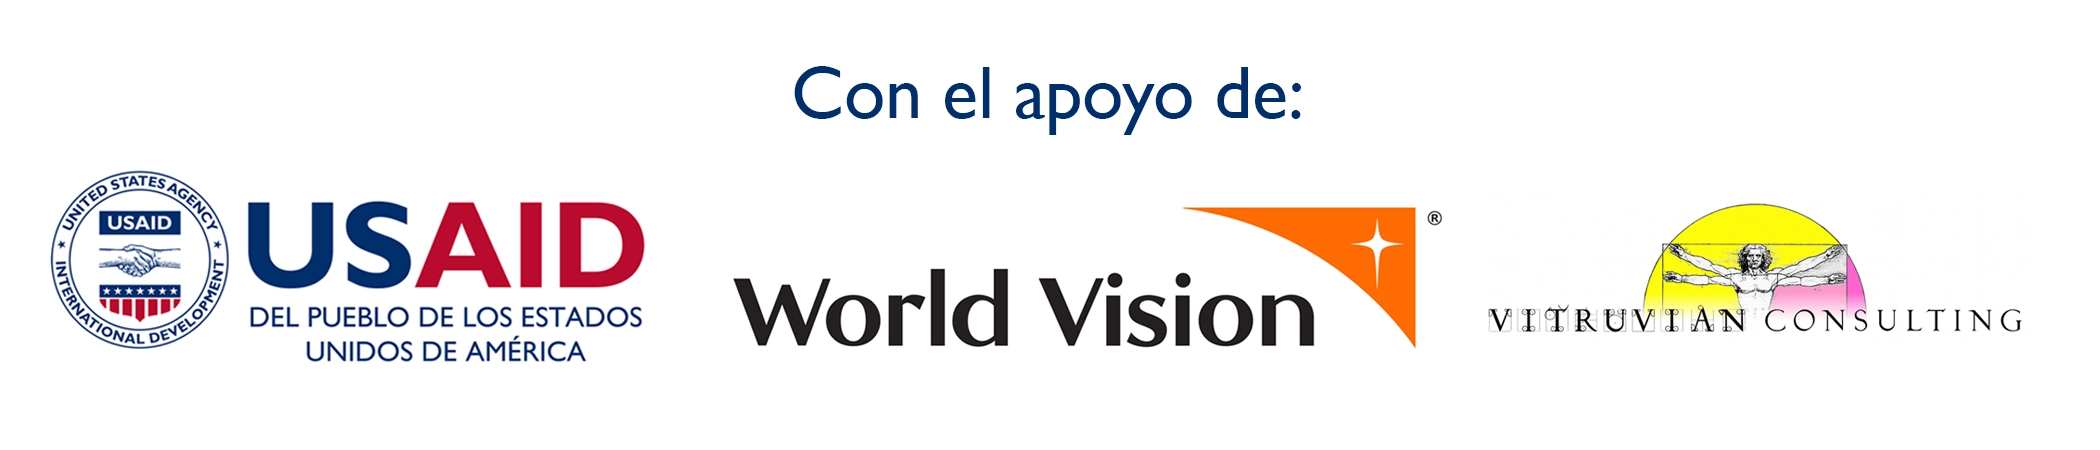 Con el apoyo de: USAID, World Vision, Vitruvian Consulting